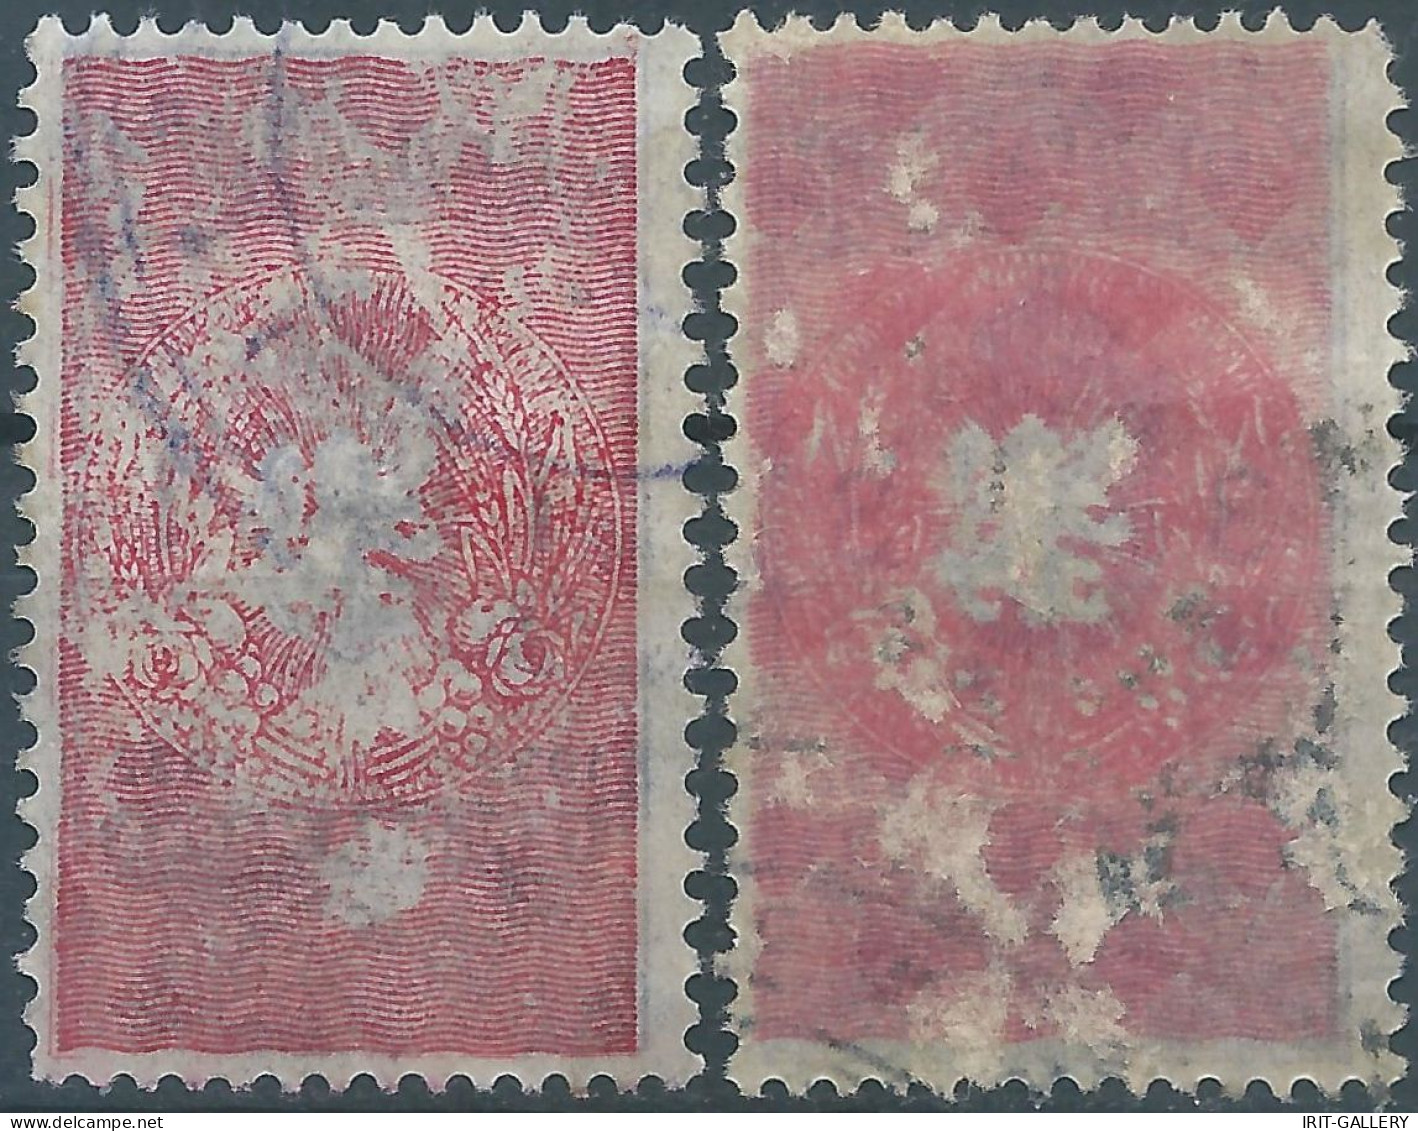 Bulgaria - Bulgarien - Bulgare,1932 Revenue Stamps Tax Fiscal,Used - Dienstmarken